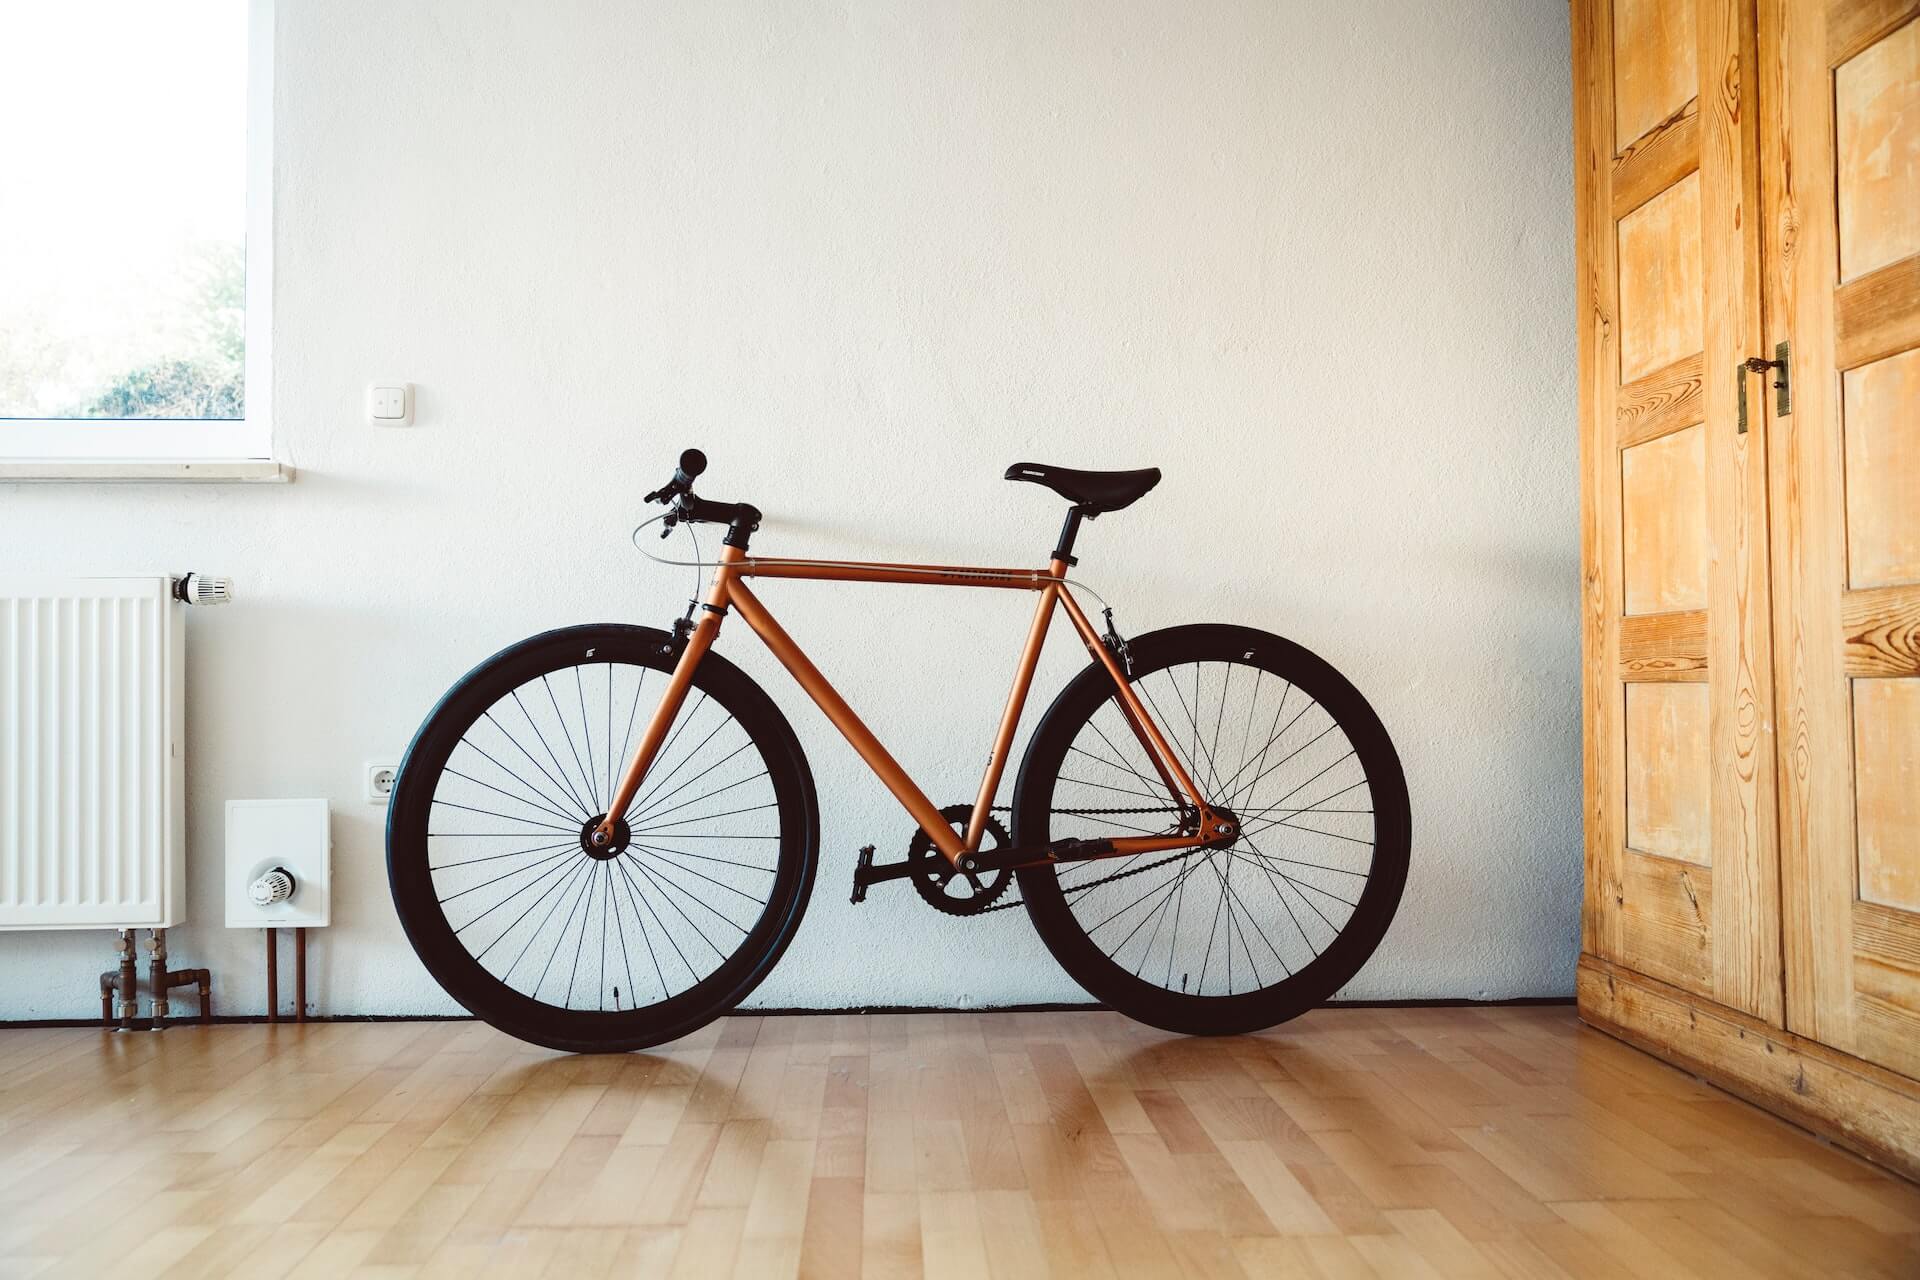 Bike on a brown wooden floor